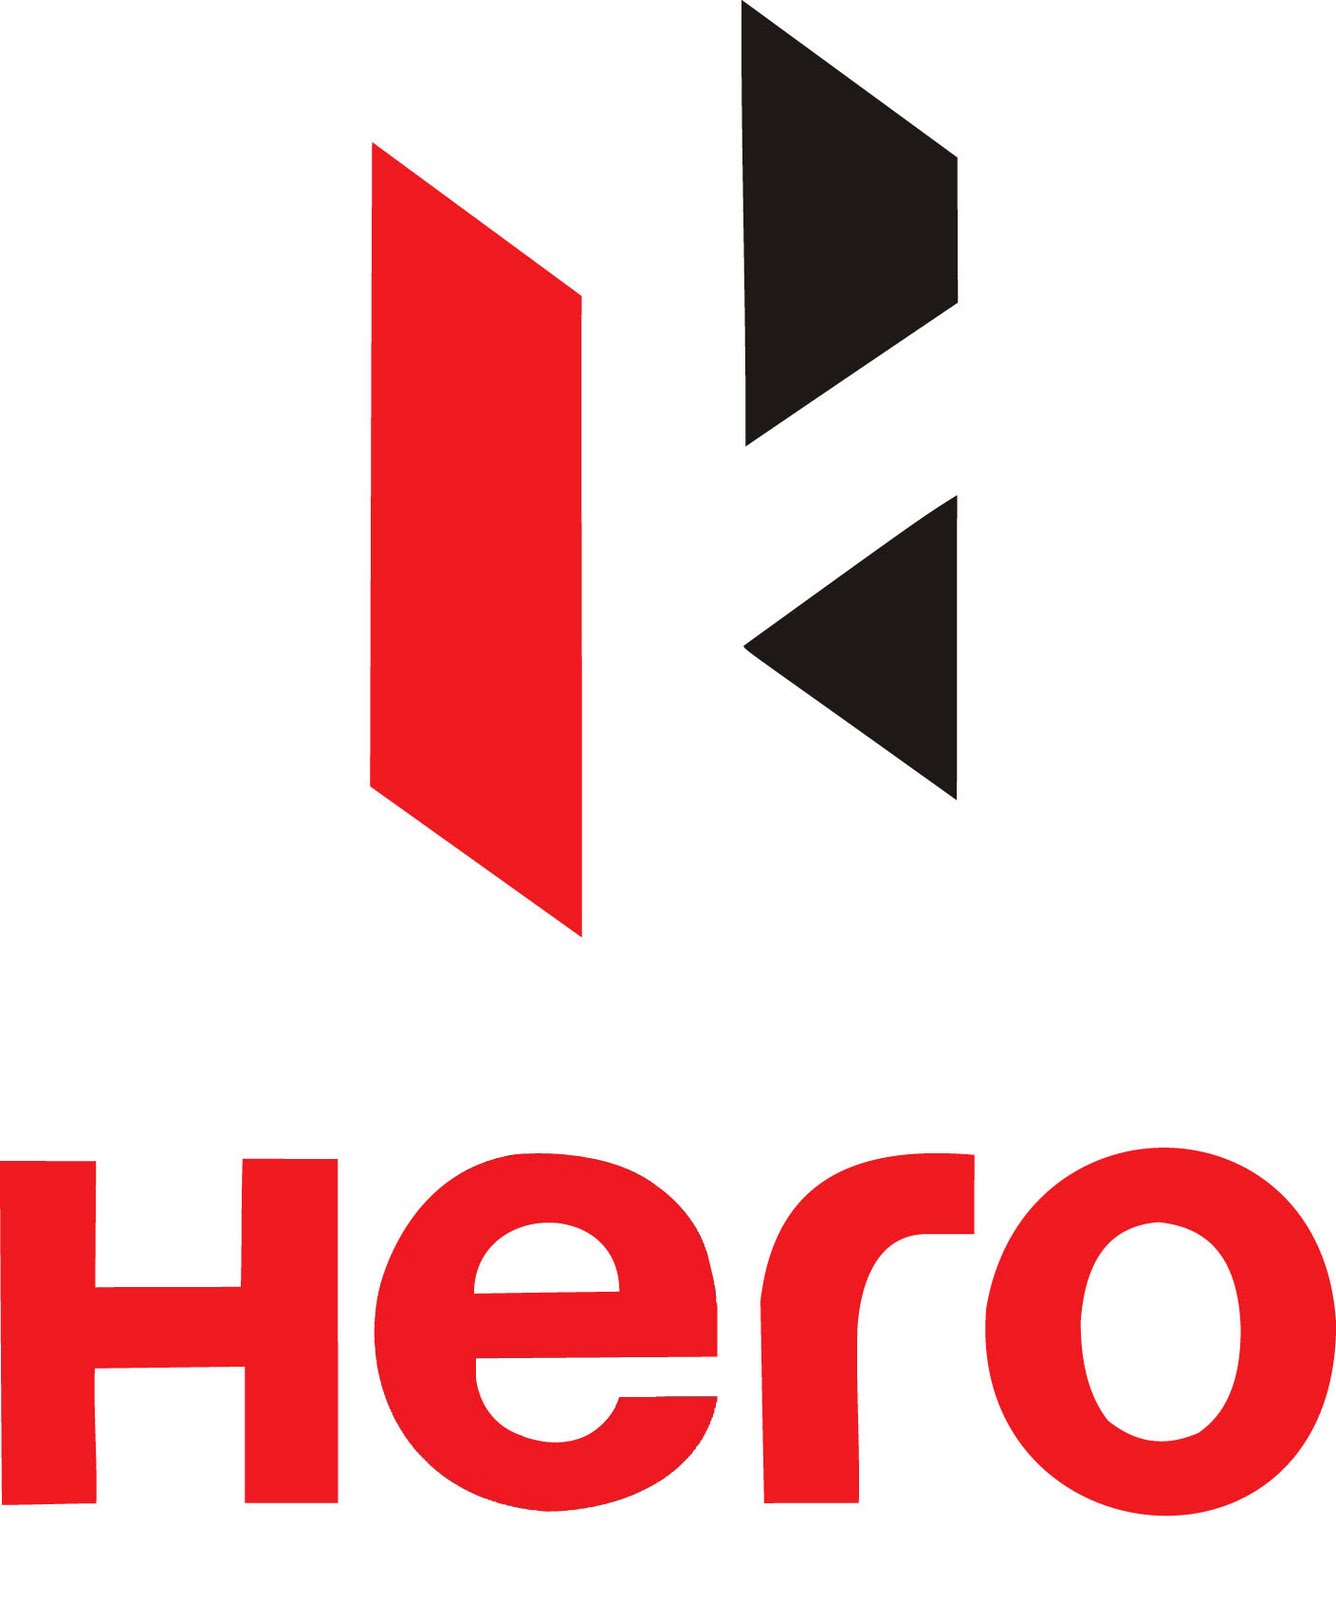 hero cycle logo